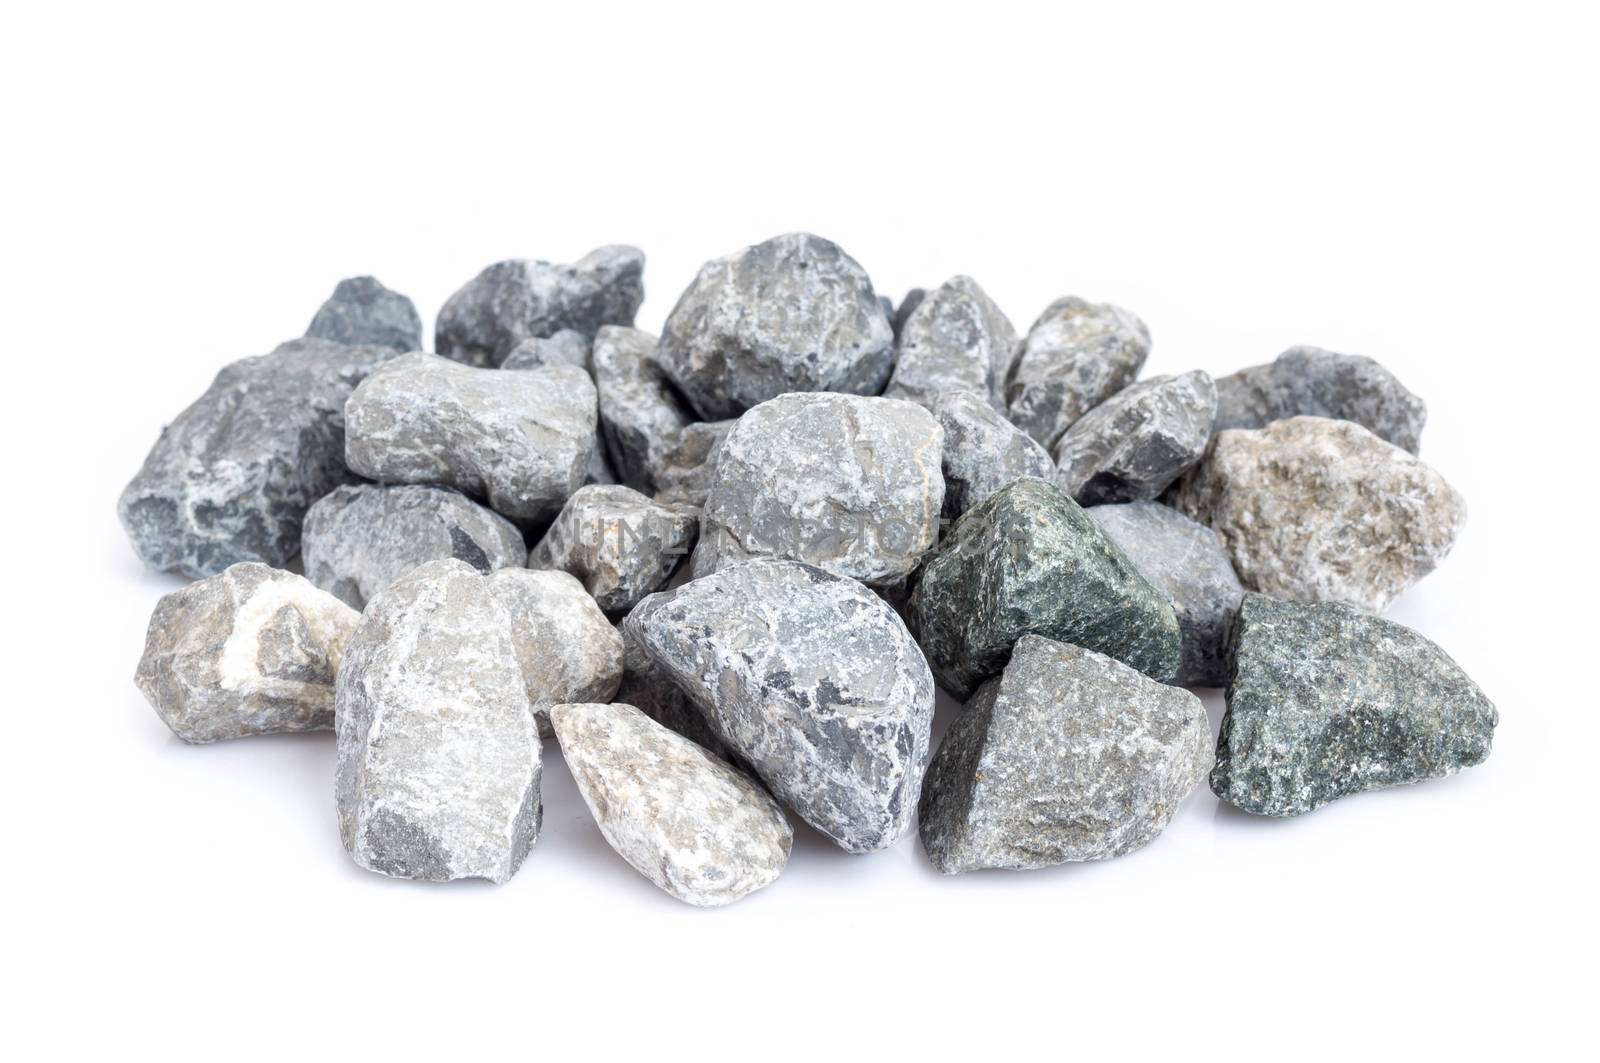 pebble stones isolate on white background. closeup